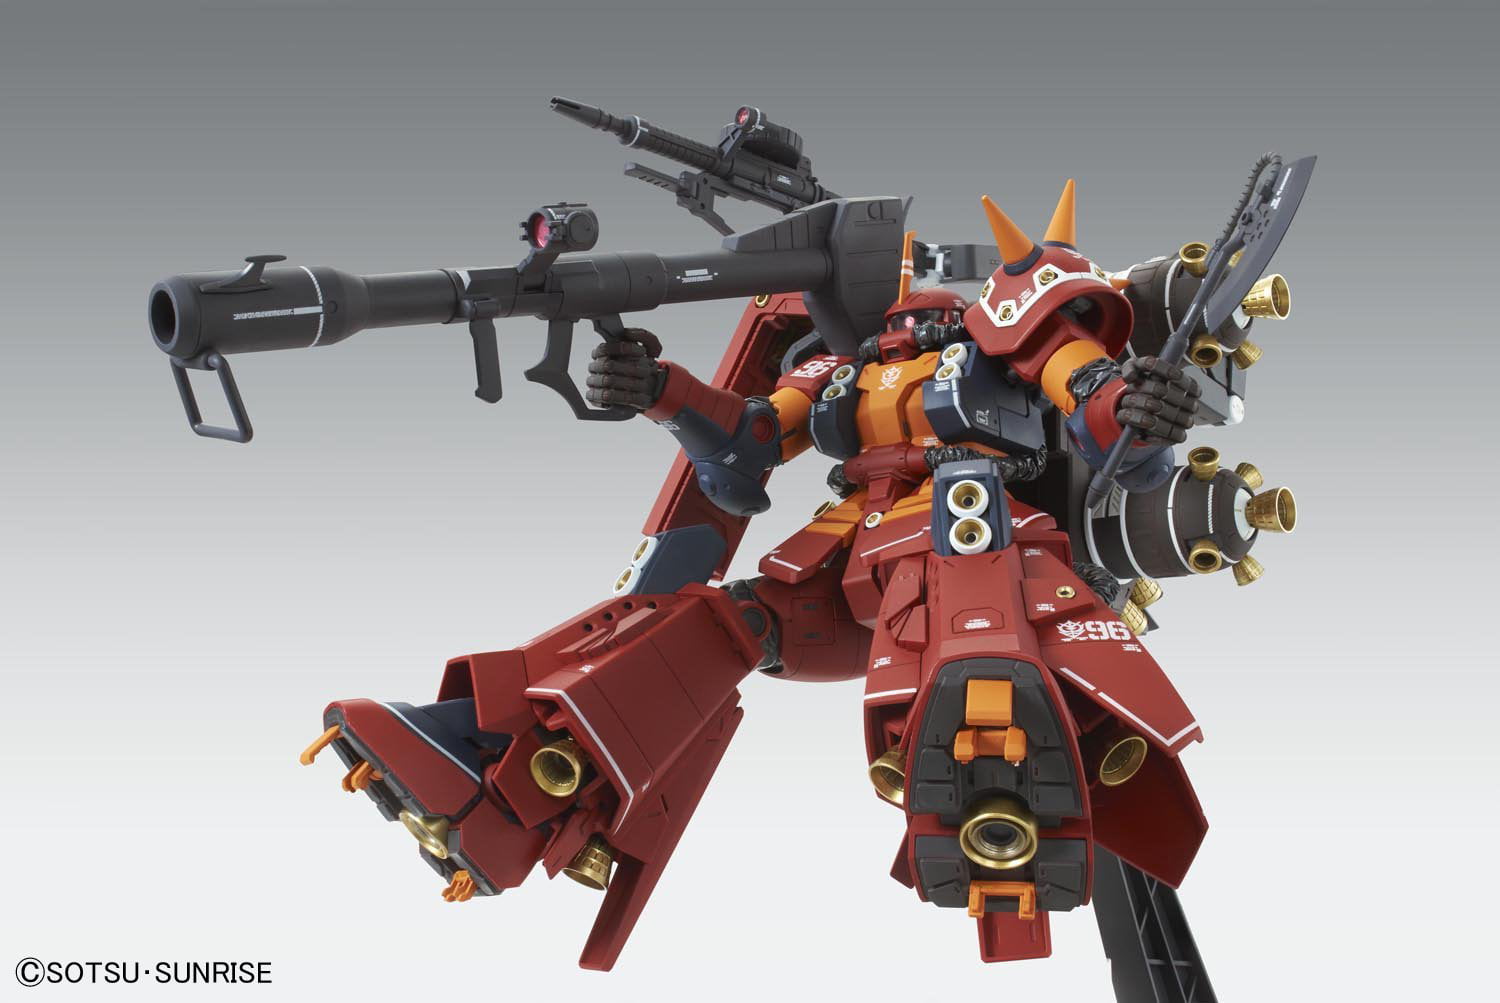 Bandai MG 1/100 Psycho Zaku Gundam Thunderbolt Kit for sale online 